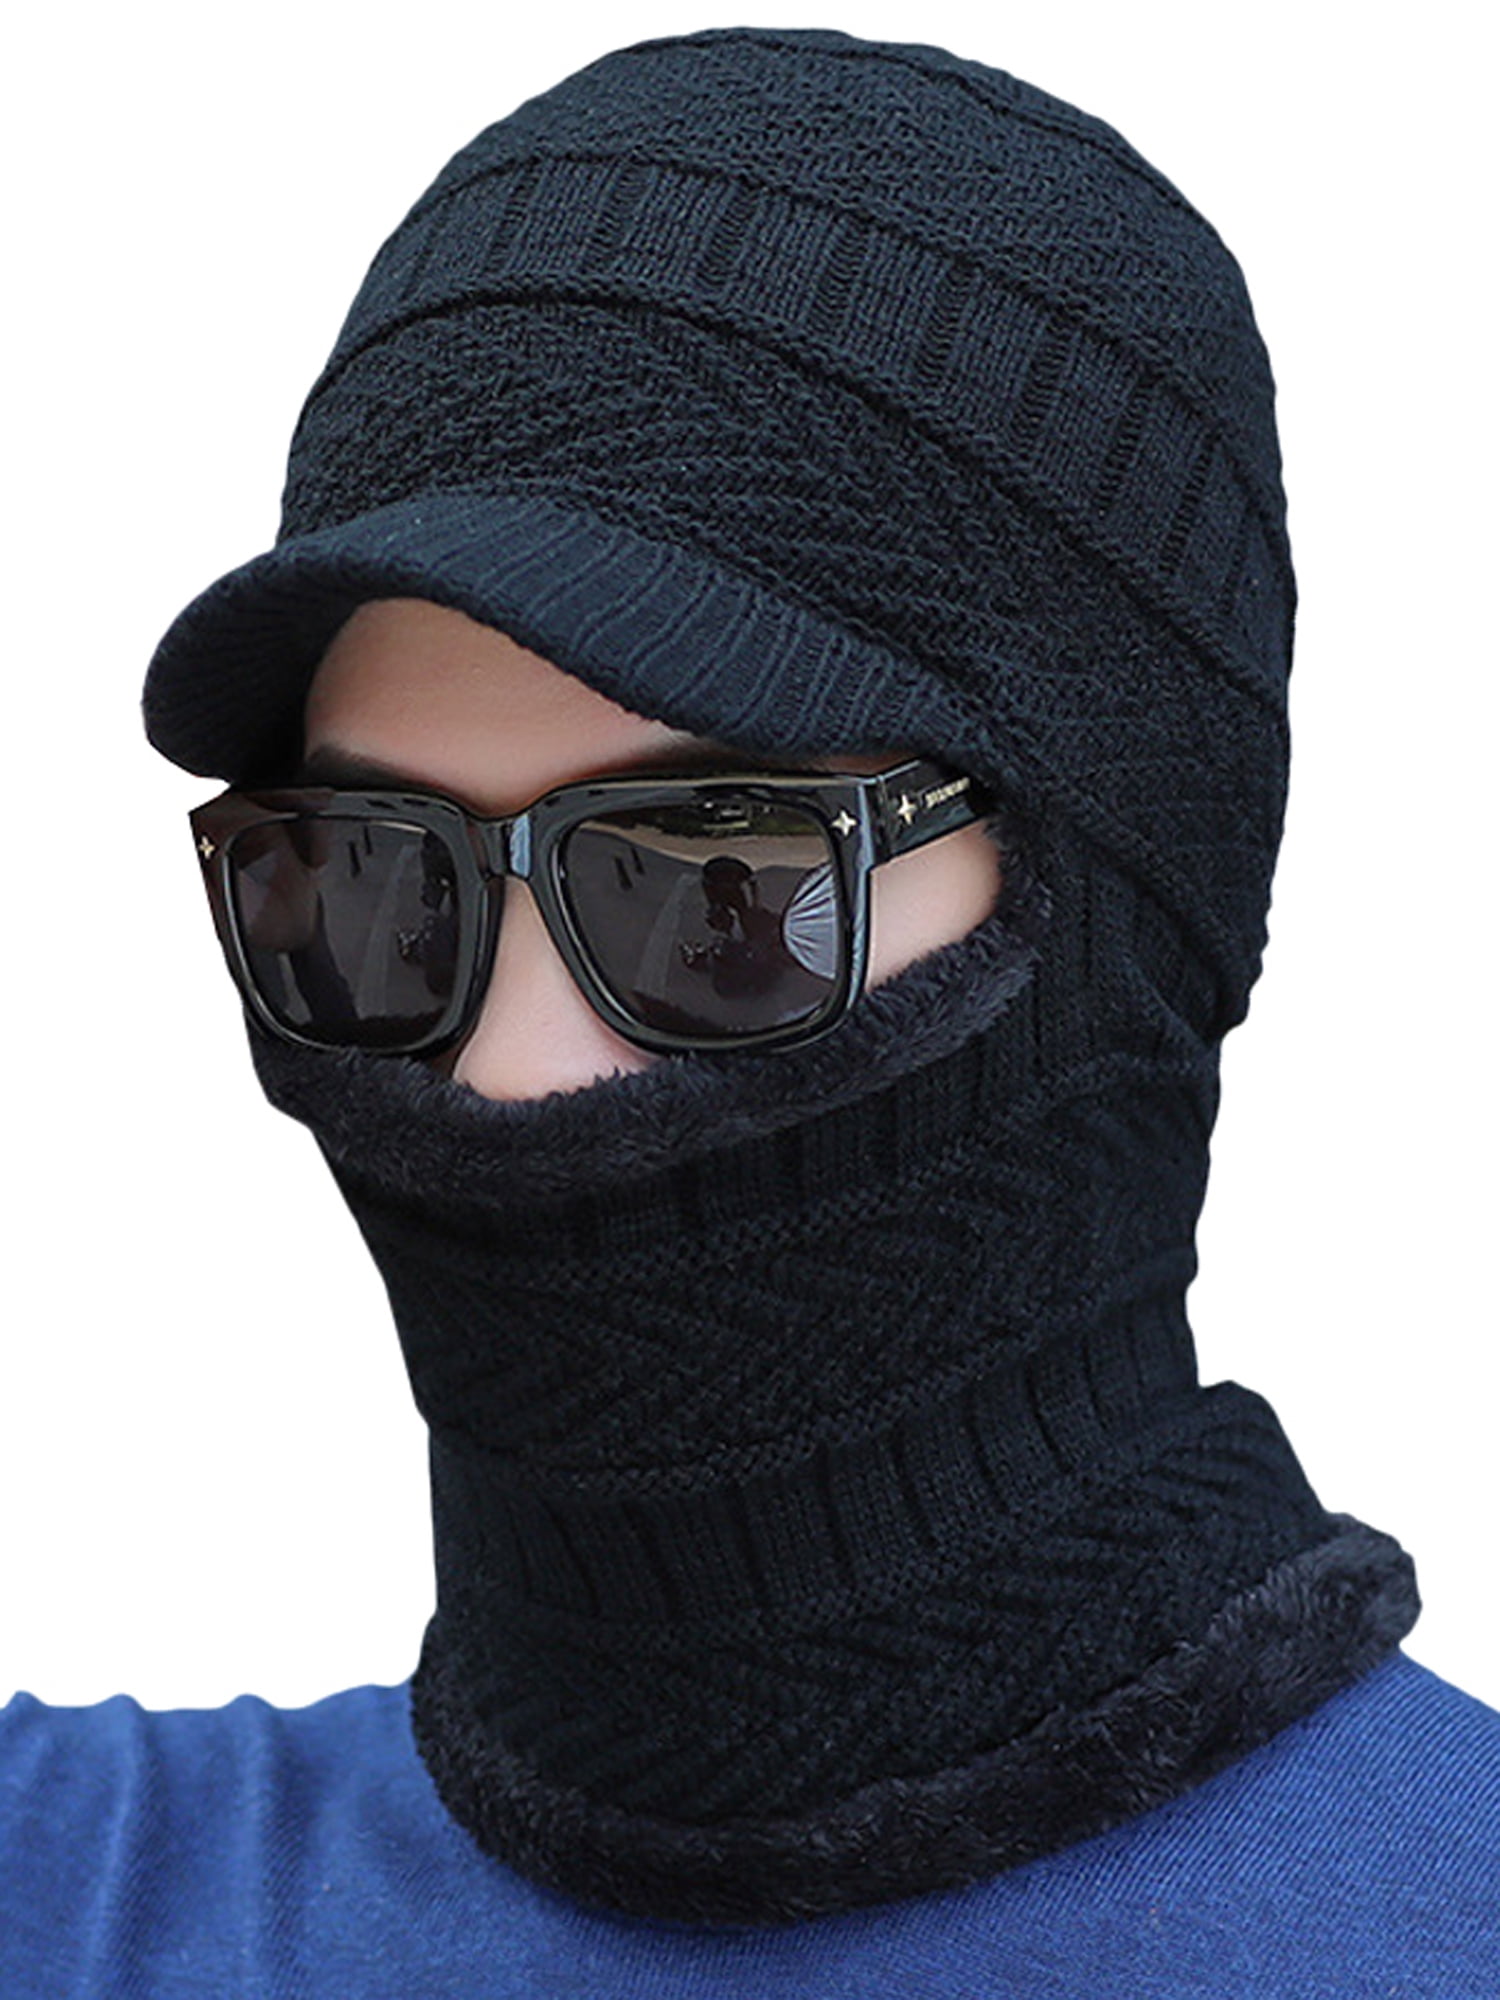 Balaclava Thick Warm Beanies Men Women Winter Hats Sleeve Caps Snow Ski Mask Boy 